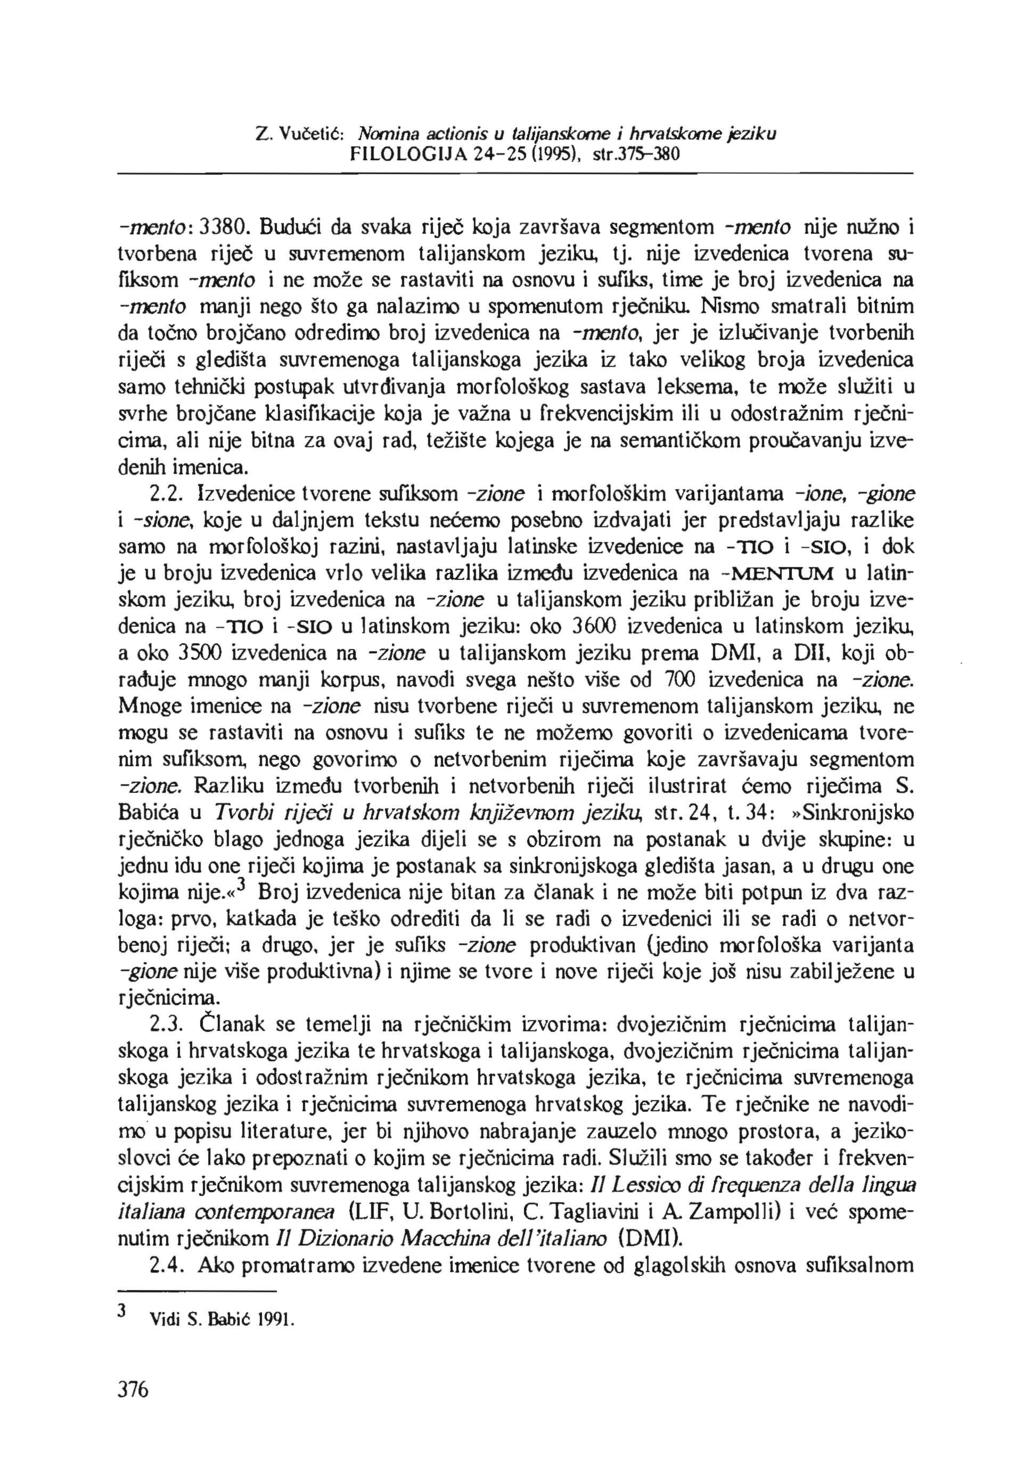 Z. Vueetic: Nomina aclionis u /alijanskome i hrvatskome jeziku FILOLOGIJA 24-25 (1995), str.375-380 -mento: 3380.